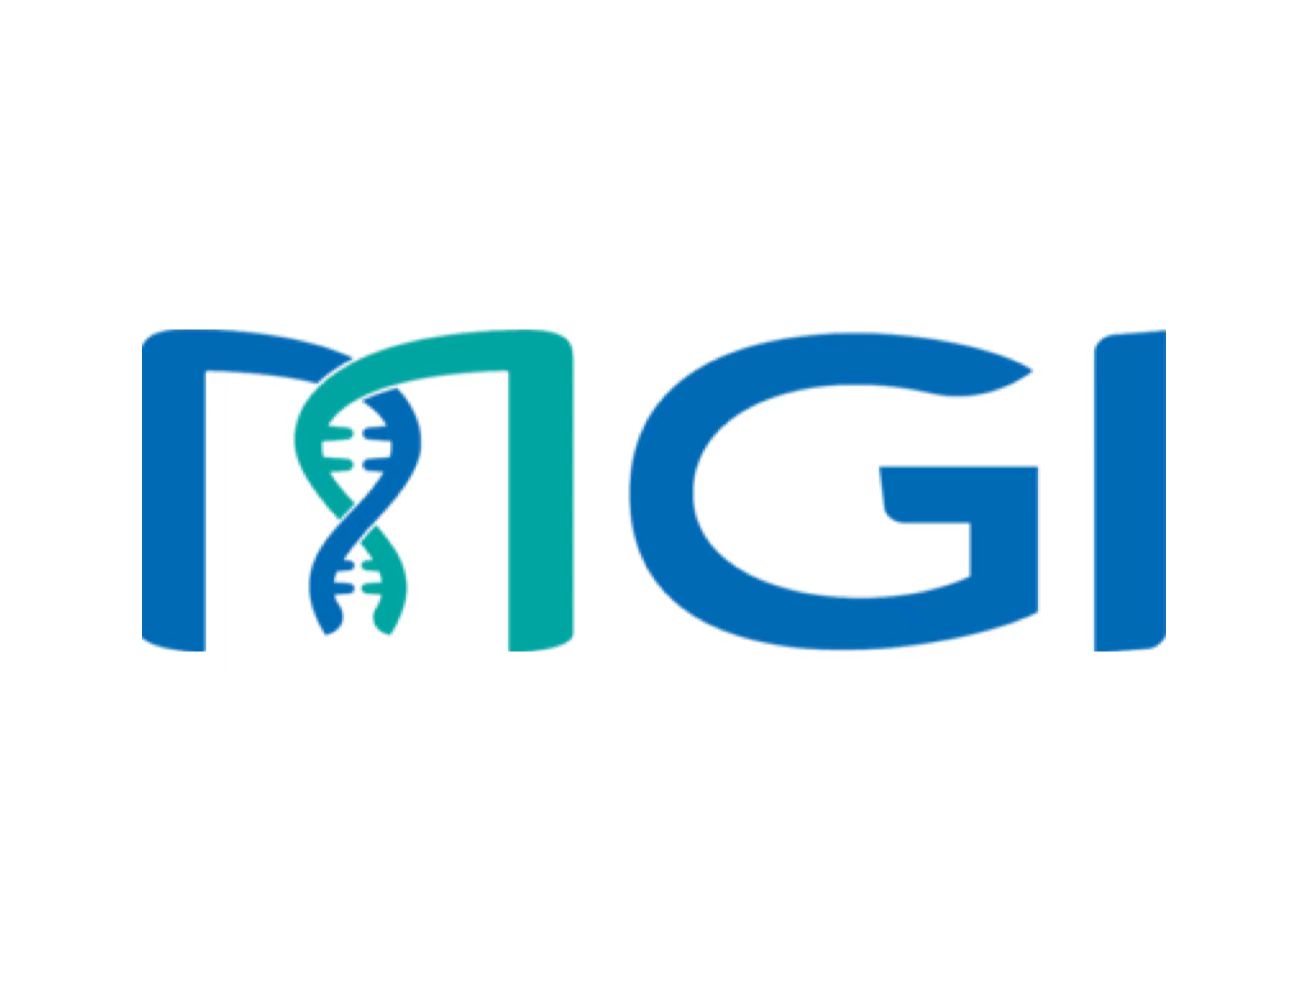 2023EBC丨MGI Tech DNBSEQ-G99 signed 6 new partners